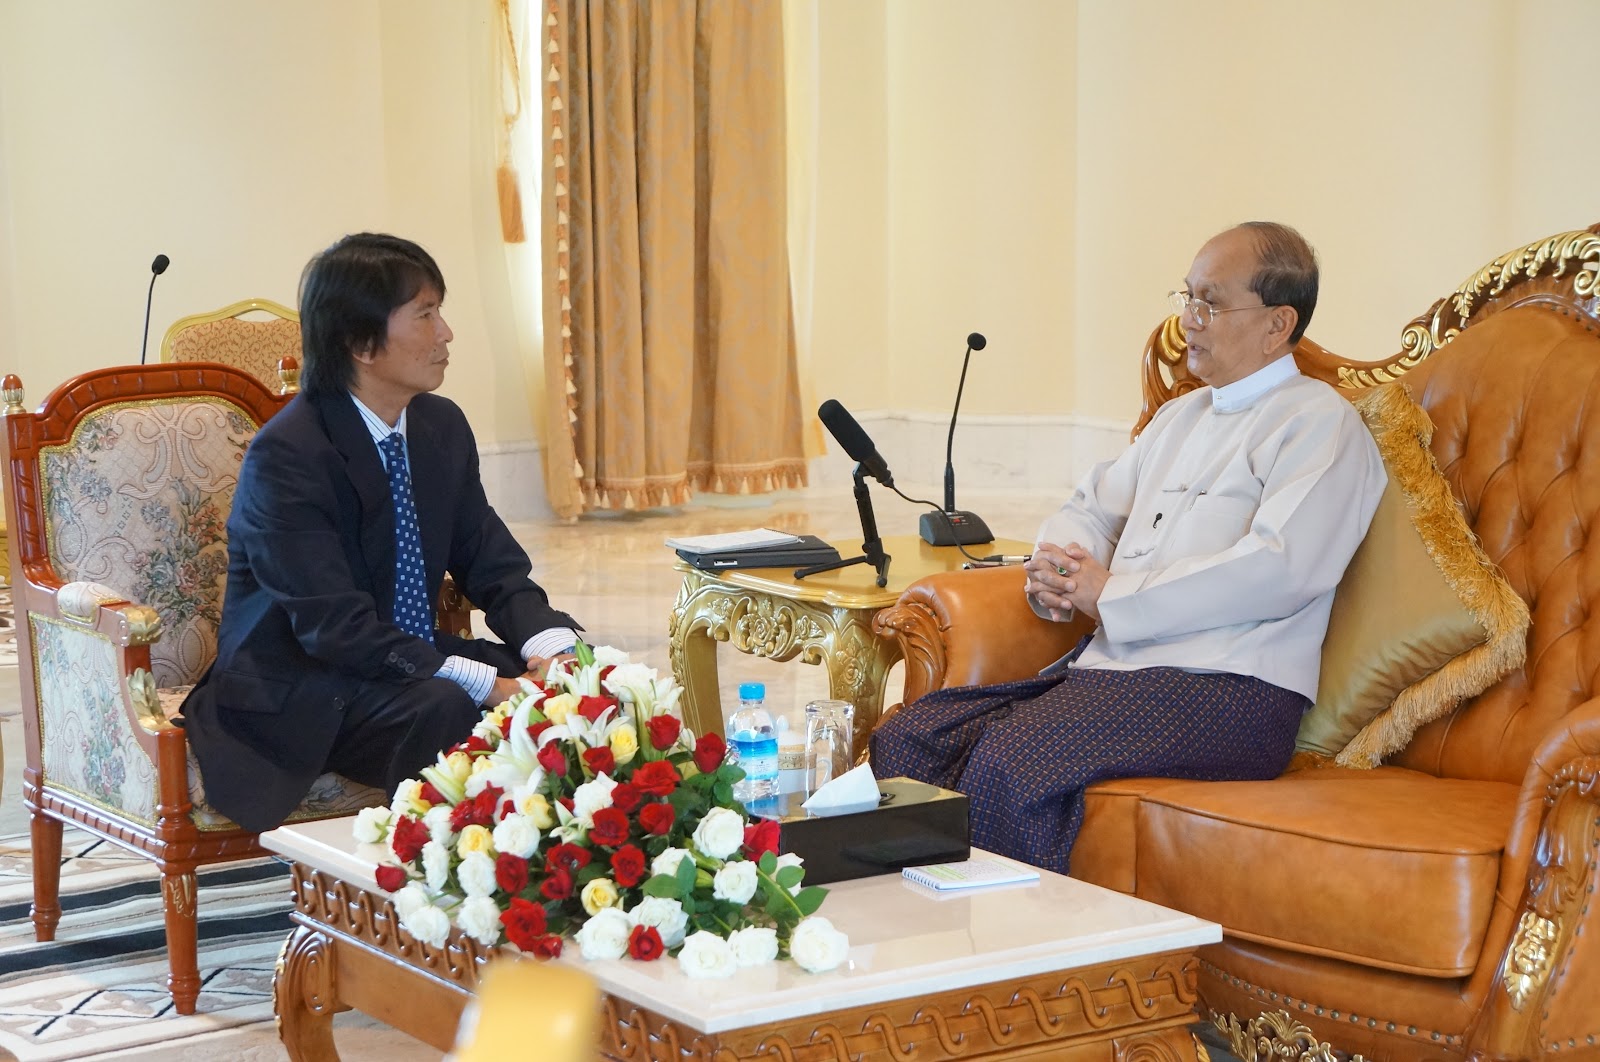 VOA Burmese chief, Than Lwin Htun with President Thein Sein